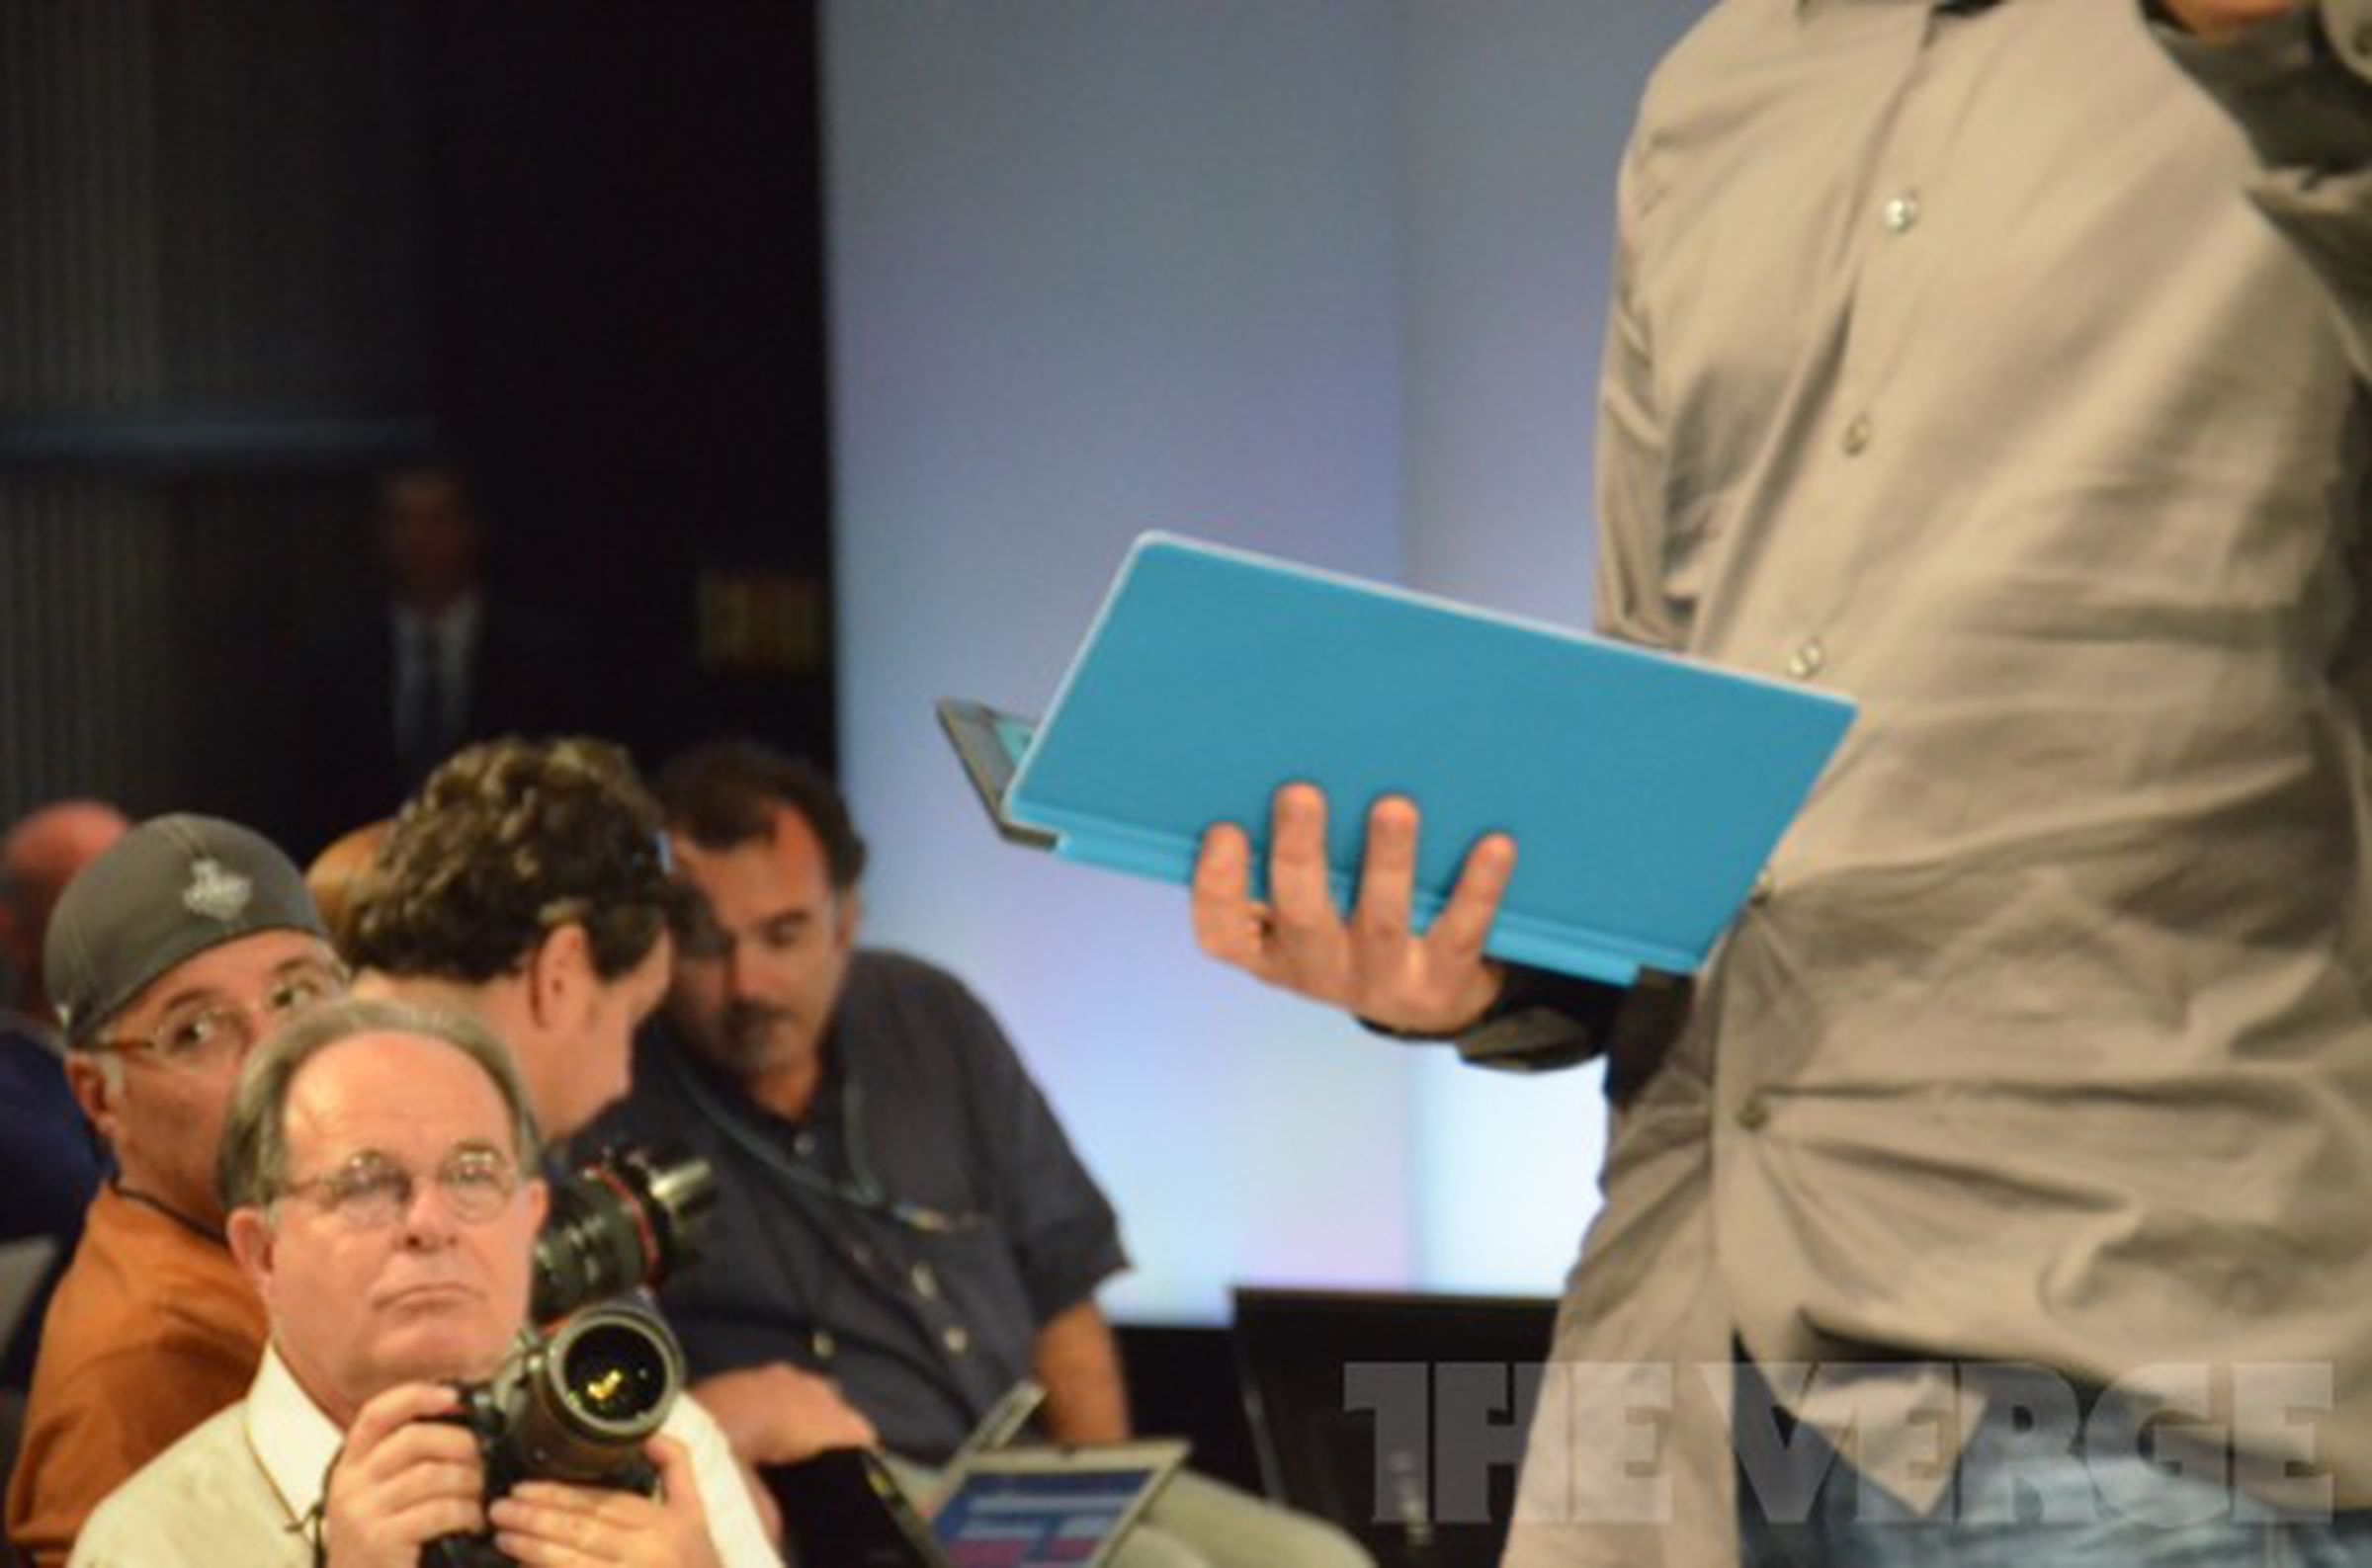 Microsoft Surface tablet liveblog pictures 